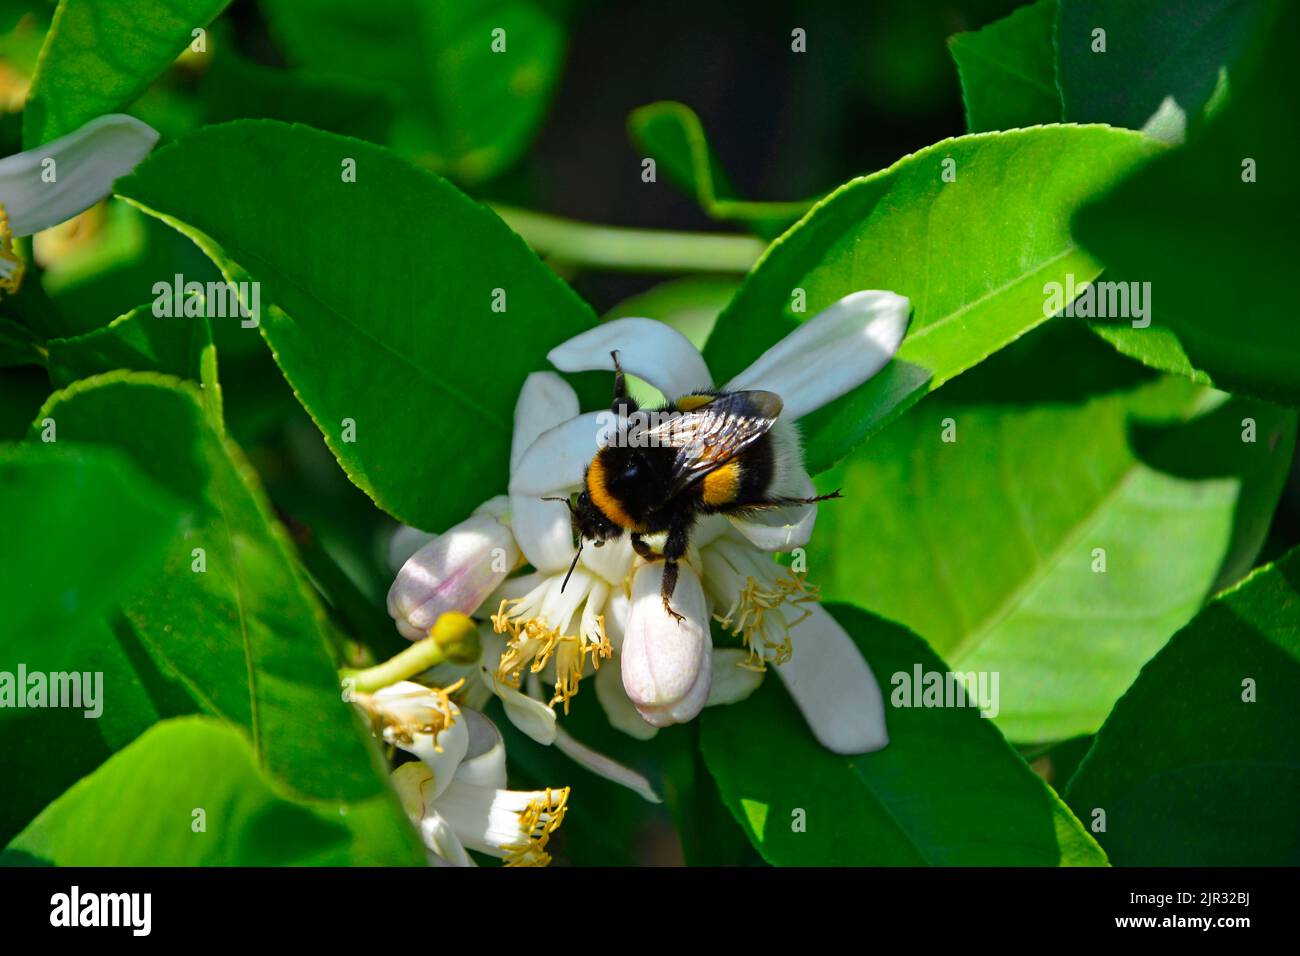 Bumblebee on a lemon tree, blooming Citrus limon, bumblebee on lemon flowers Stock Photo